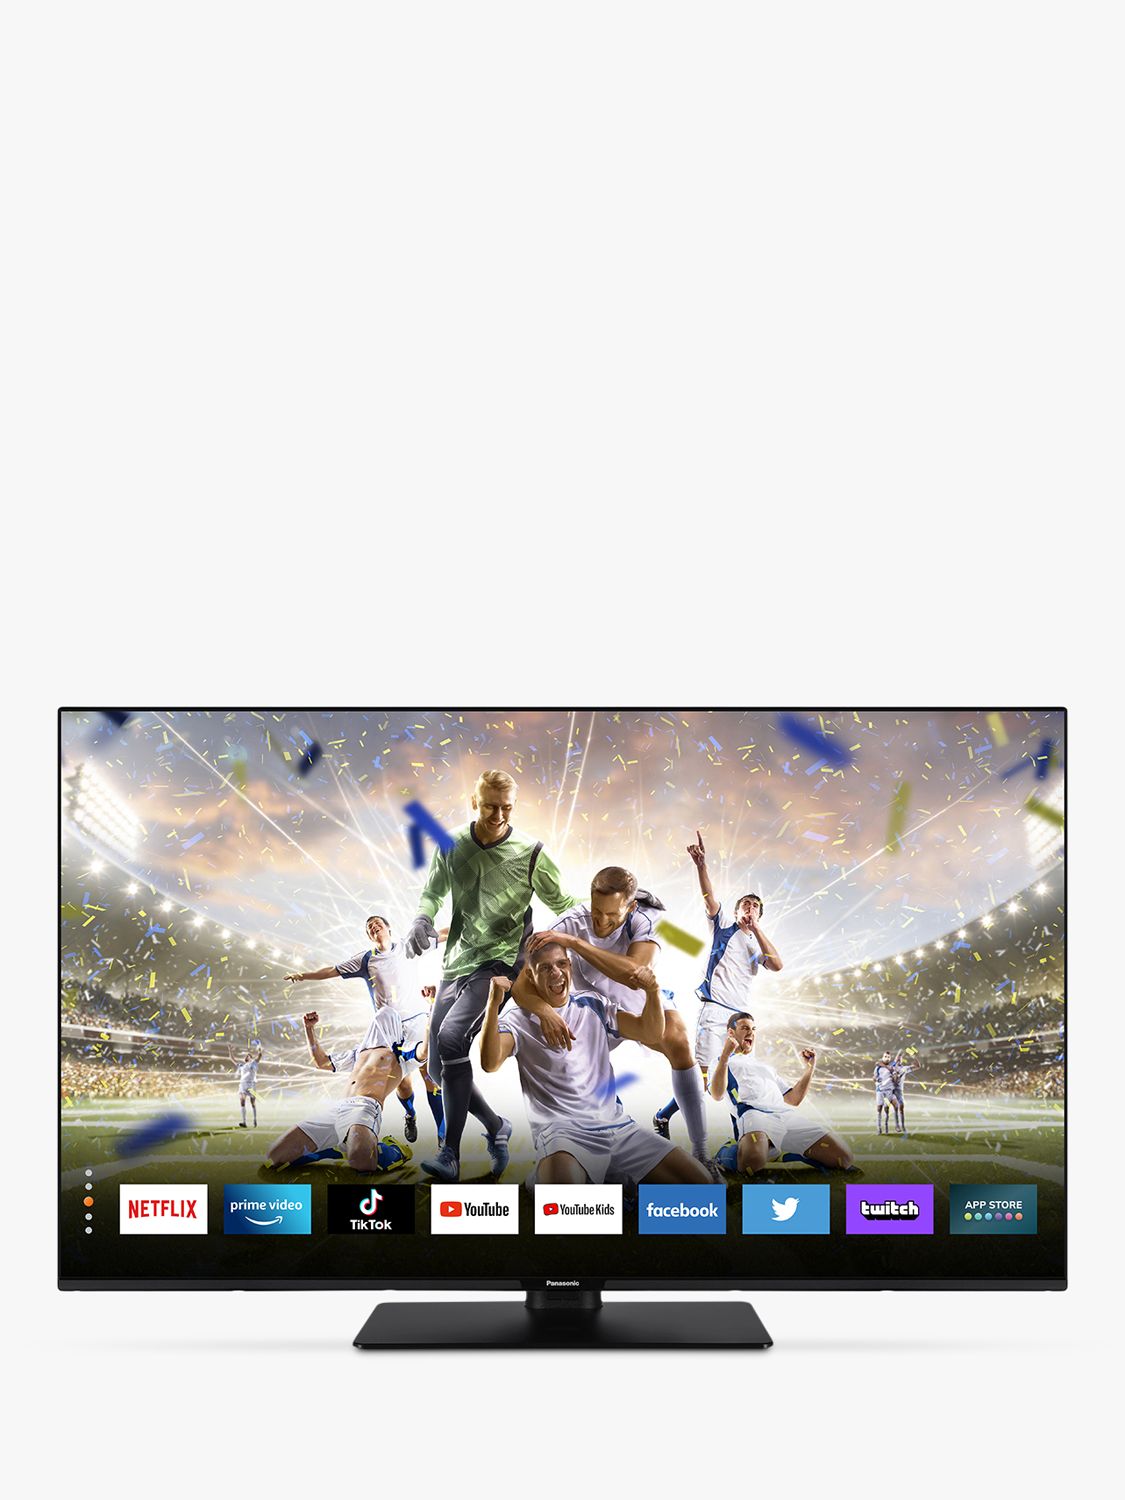 Panasonic TV Remote3 – Apps no Google Play